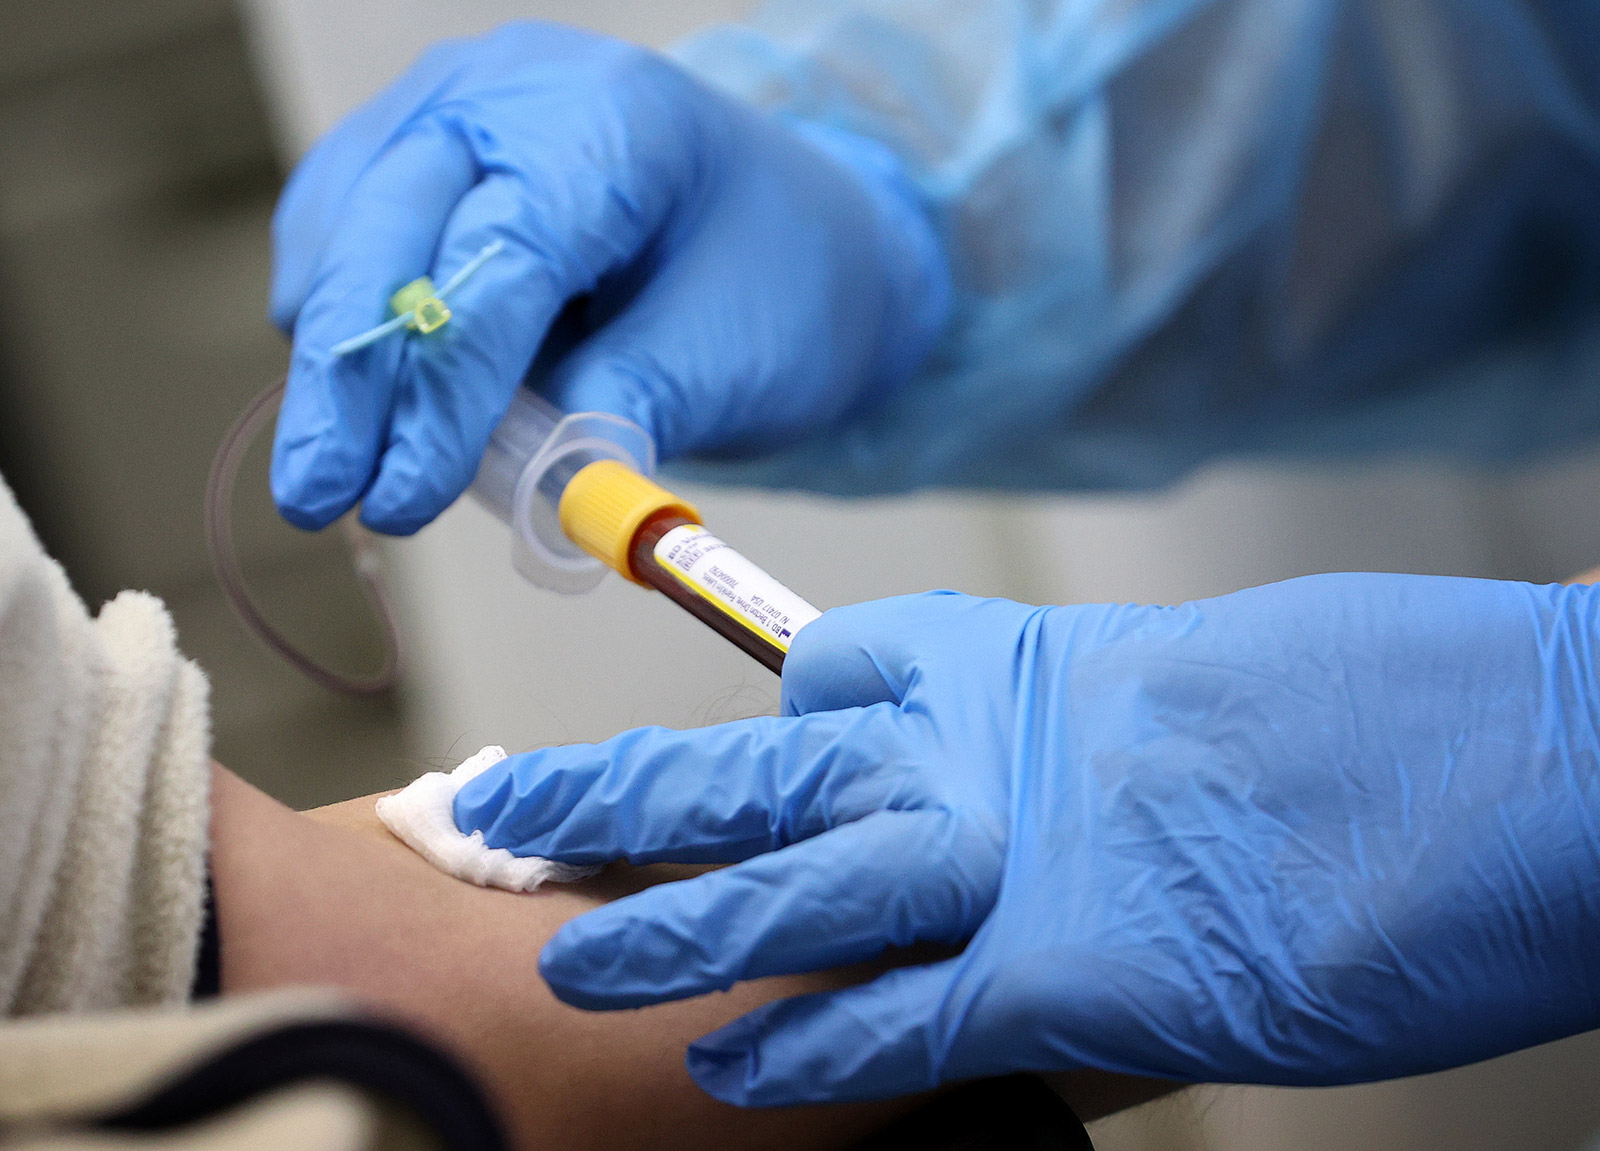 Residents have their blood drawn for coronavirus antibody tests in Washington on June 16.